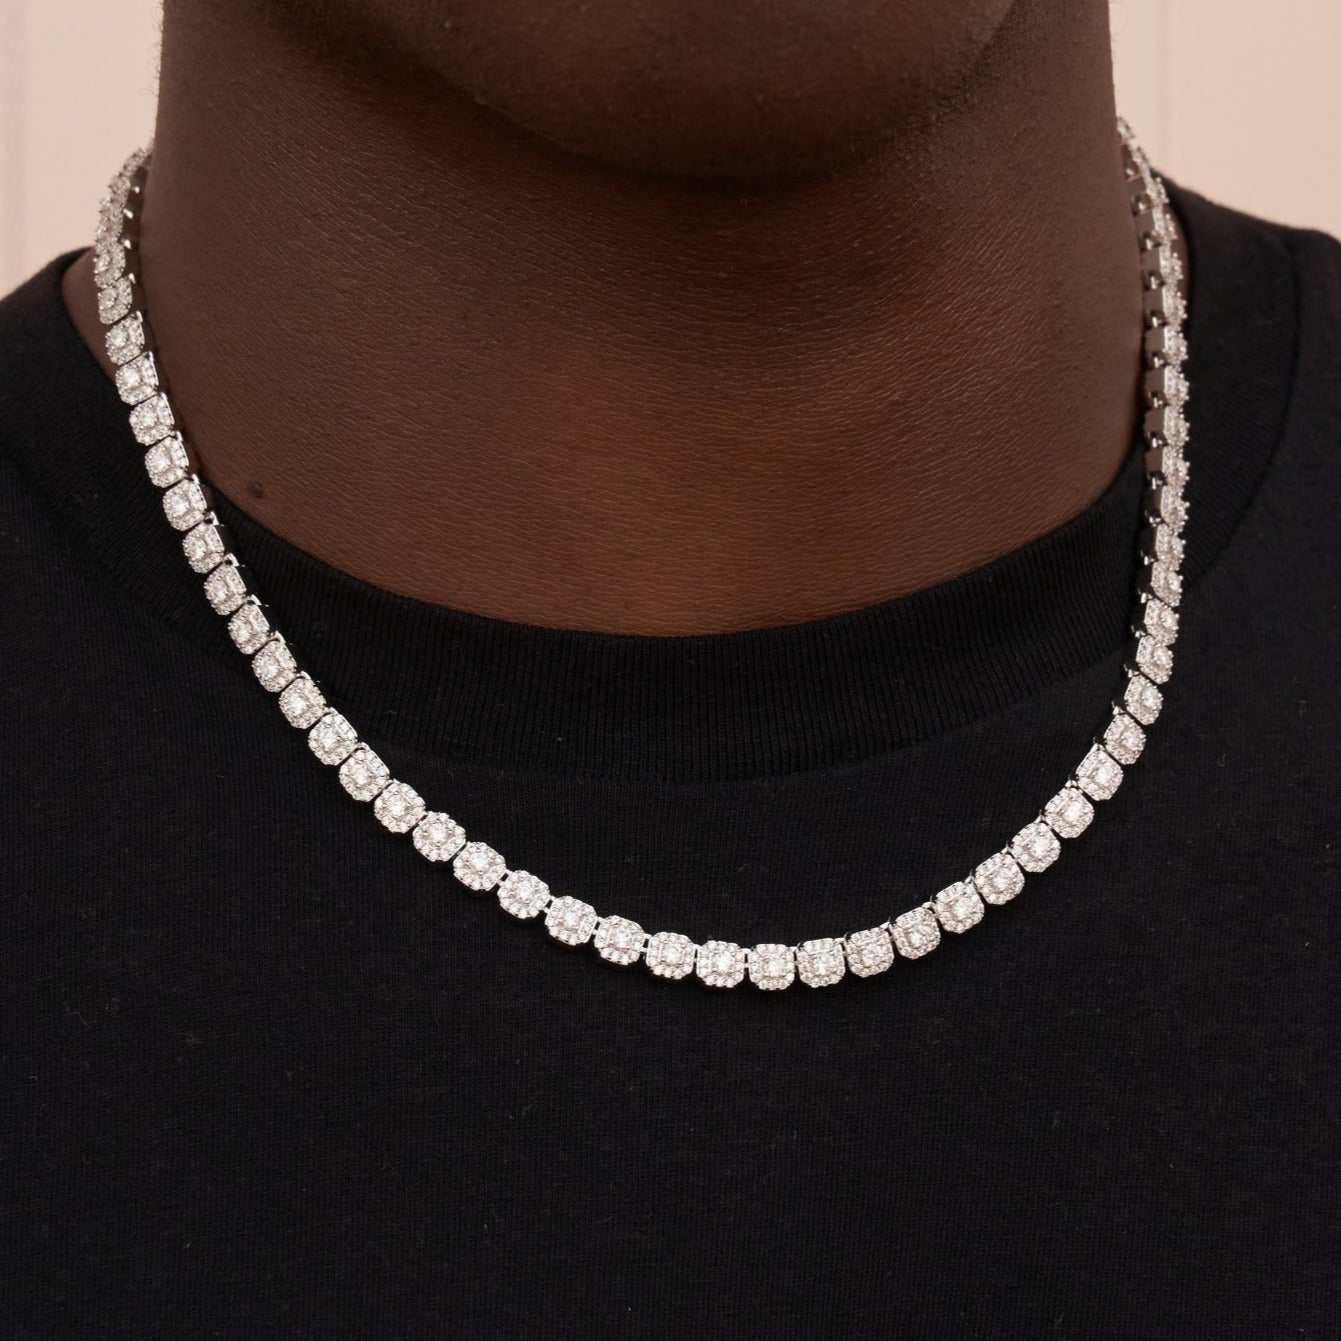 GLD shop - 22” Clustered Tennis Necklace - 14k White Gold Plated | eBay